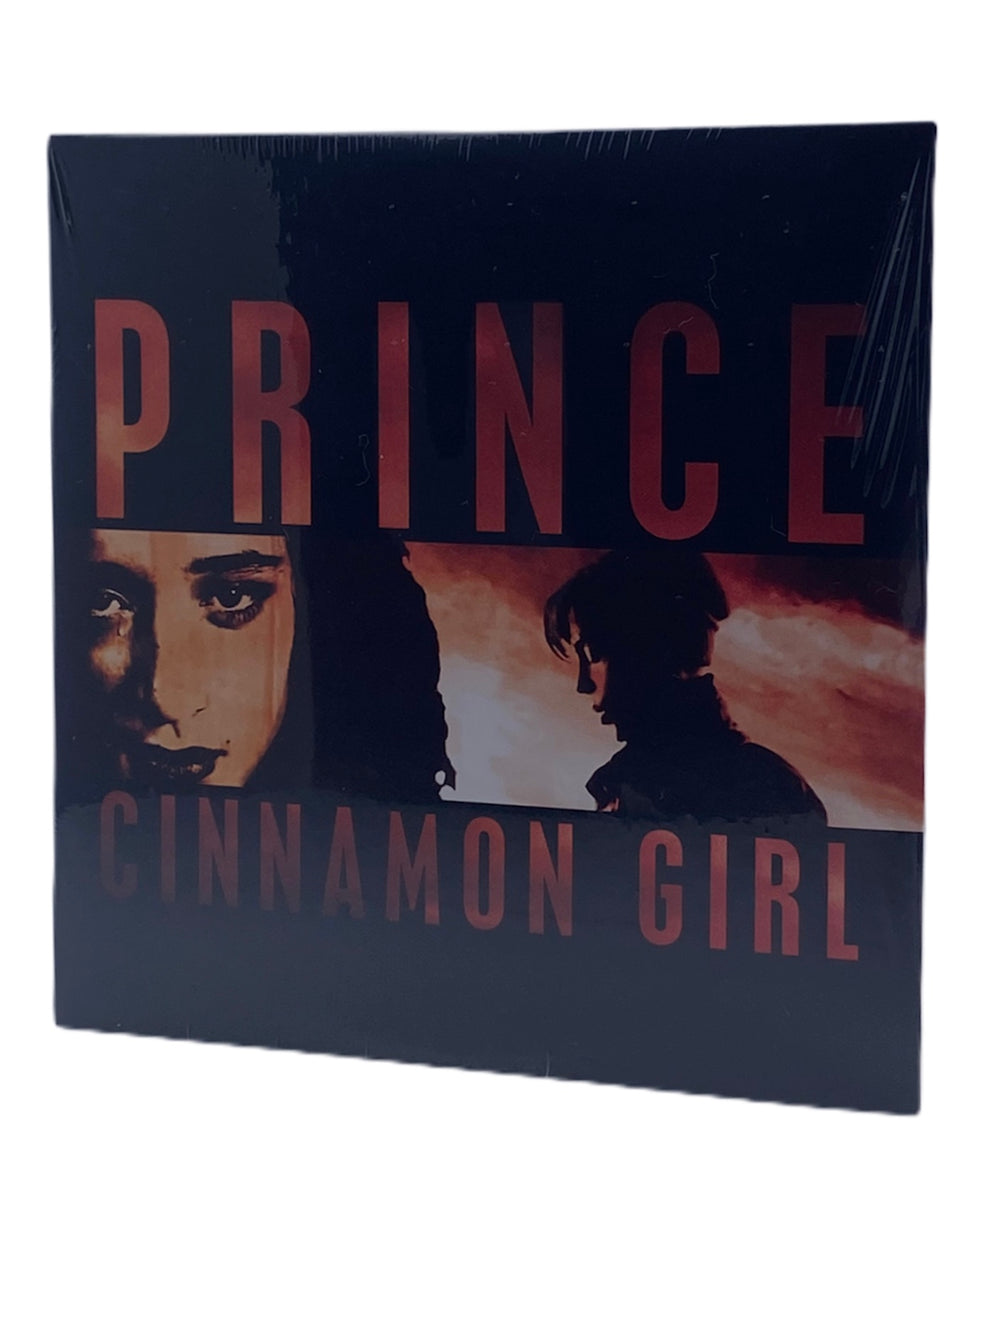 Prince – Cinnamon Girl Xposed CD Single Vintage NPG Music Club From The Vault : NEW